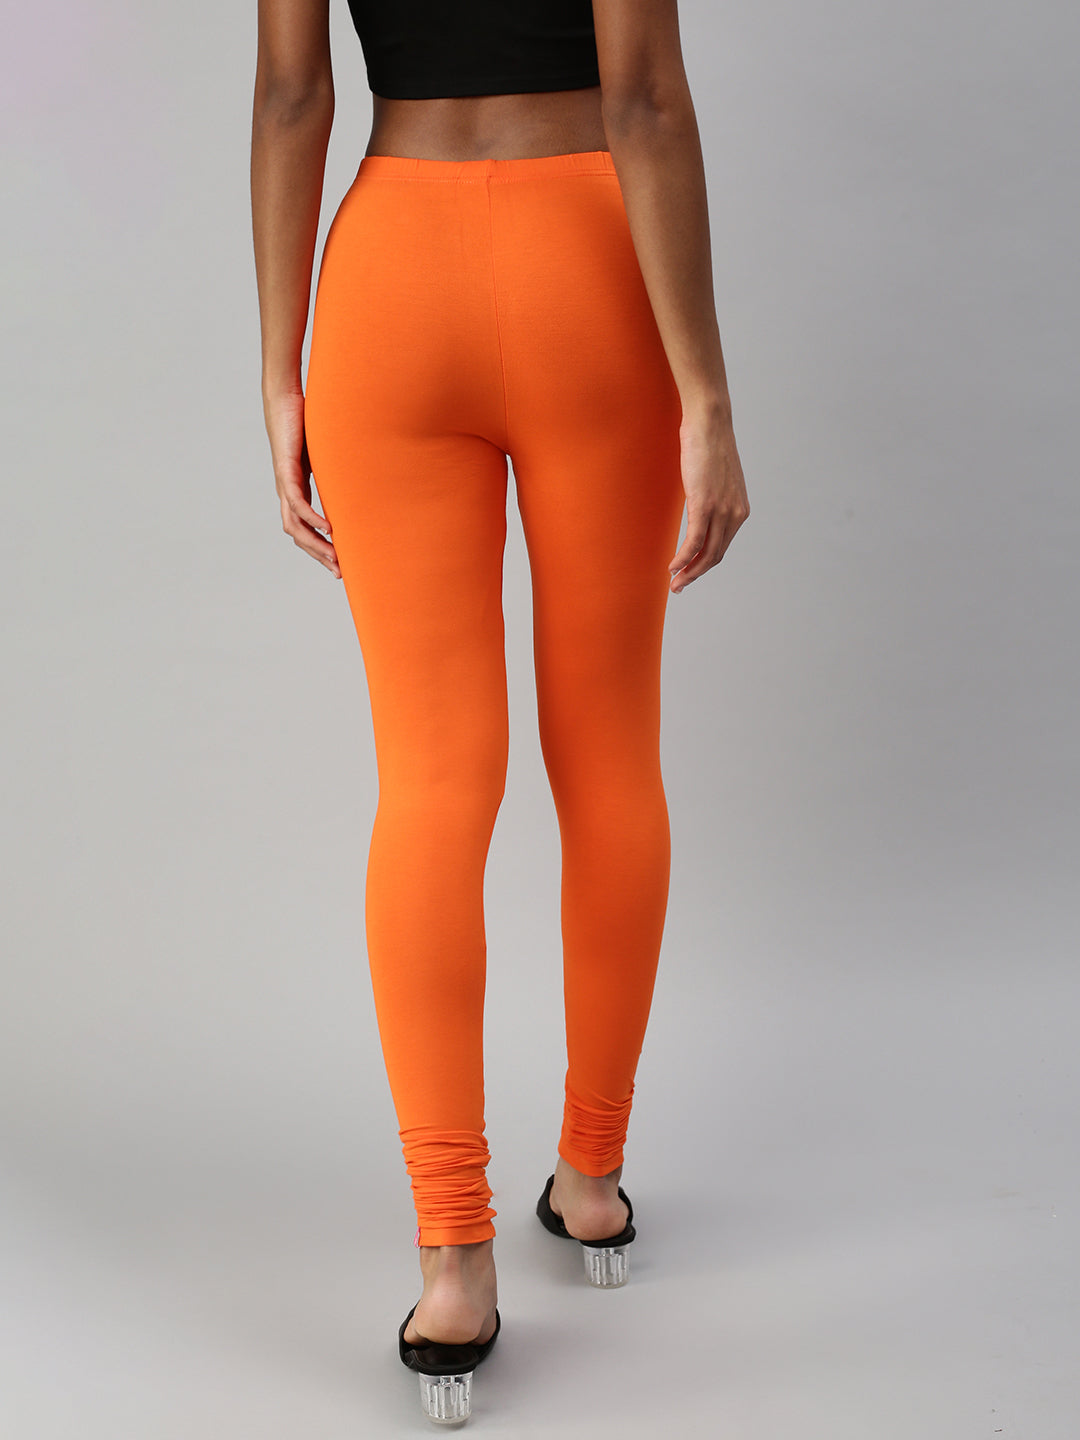 Get Stylish Orange Churidar Leggings from Prisma